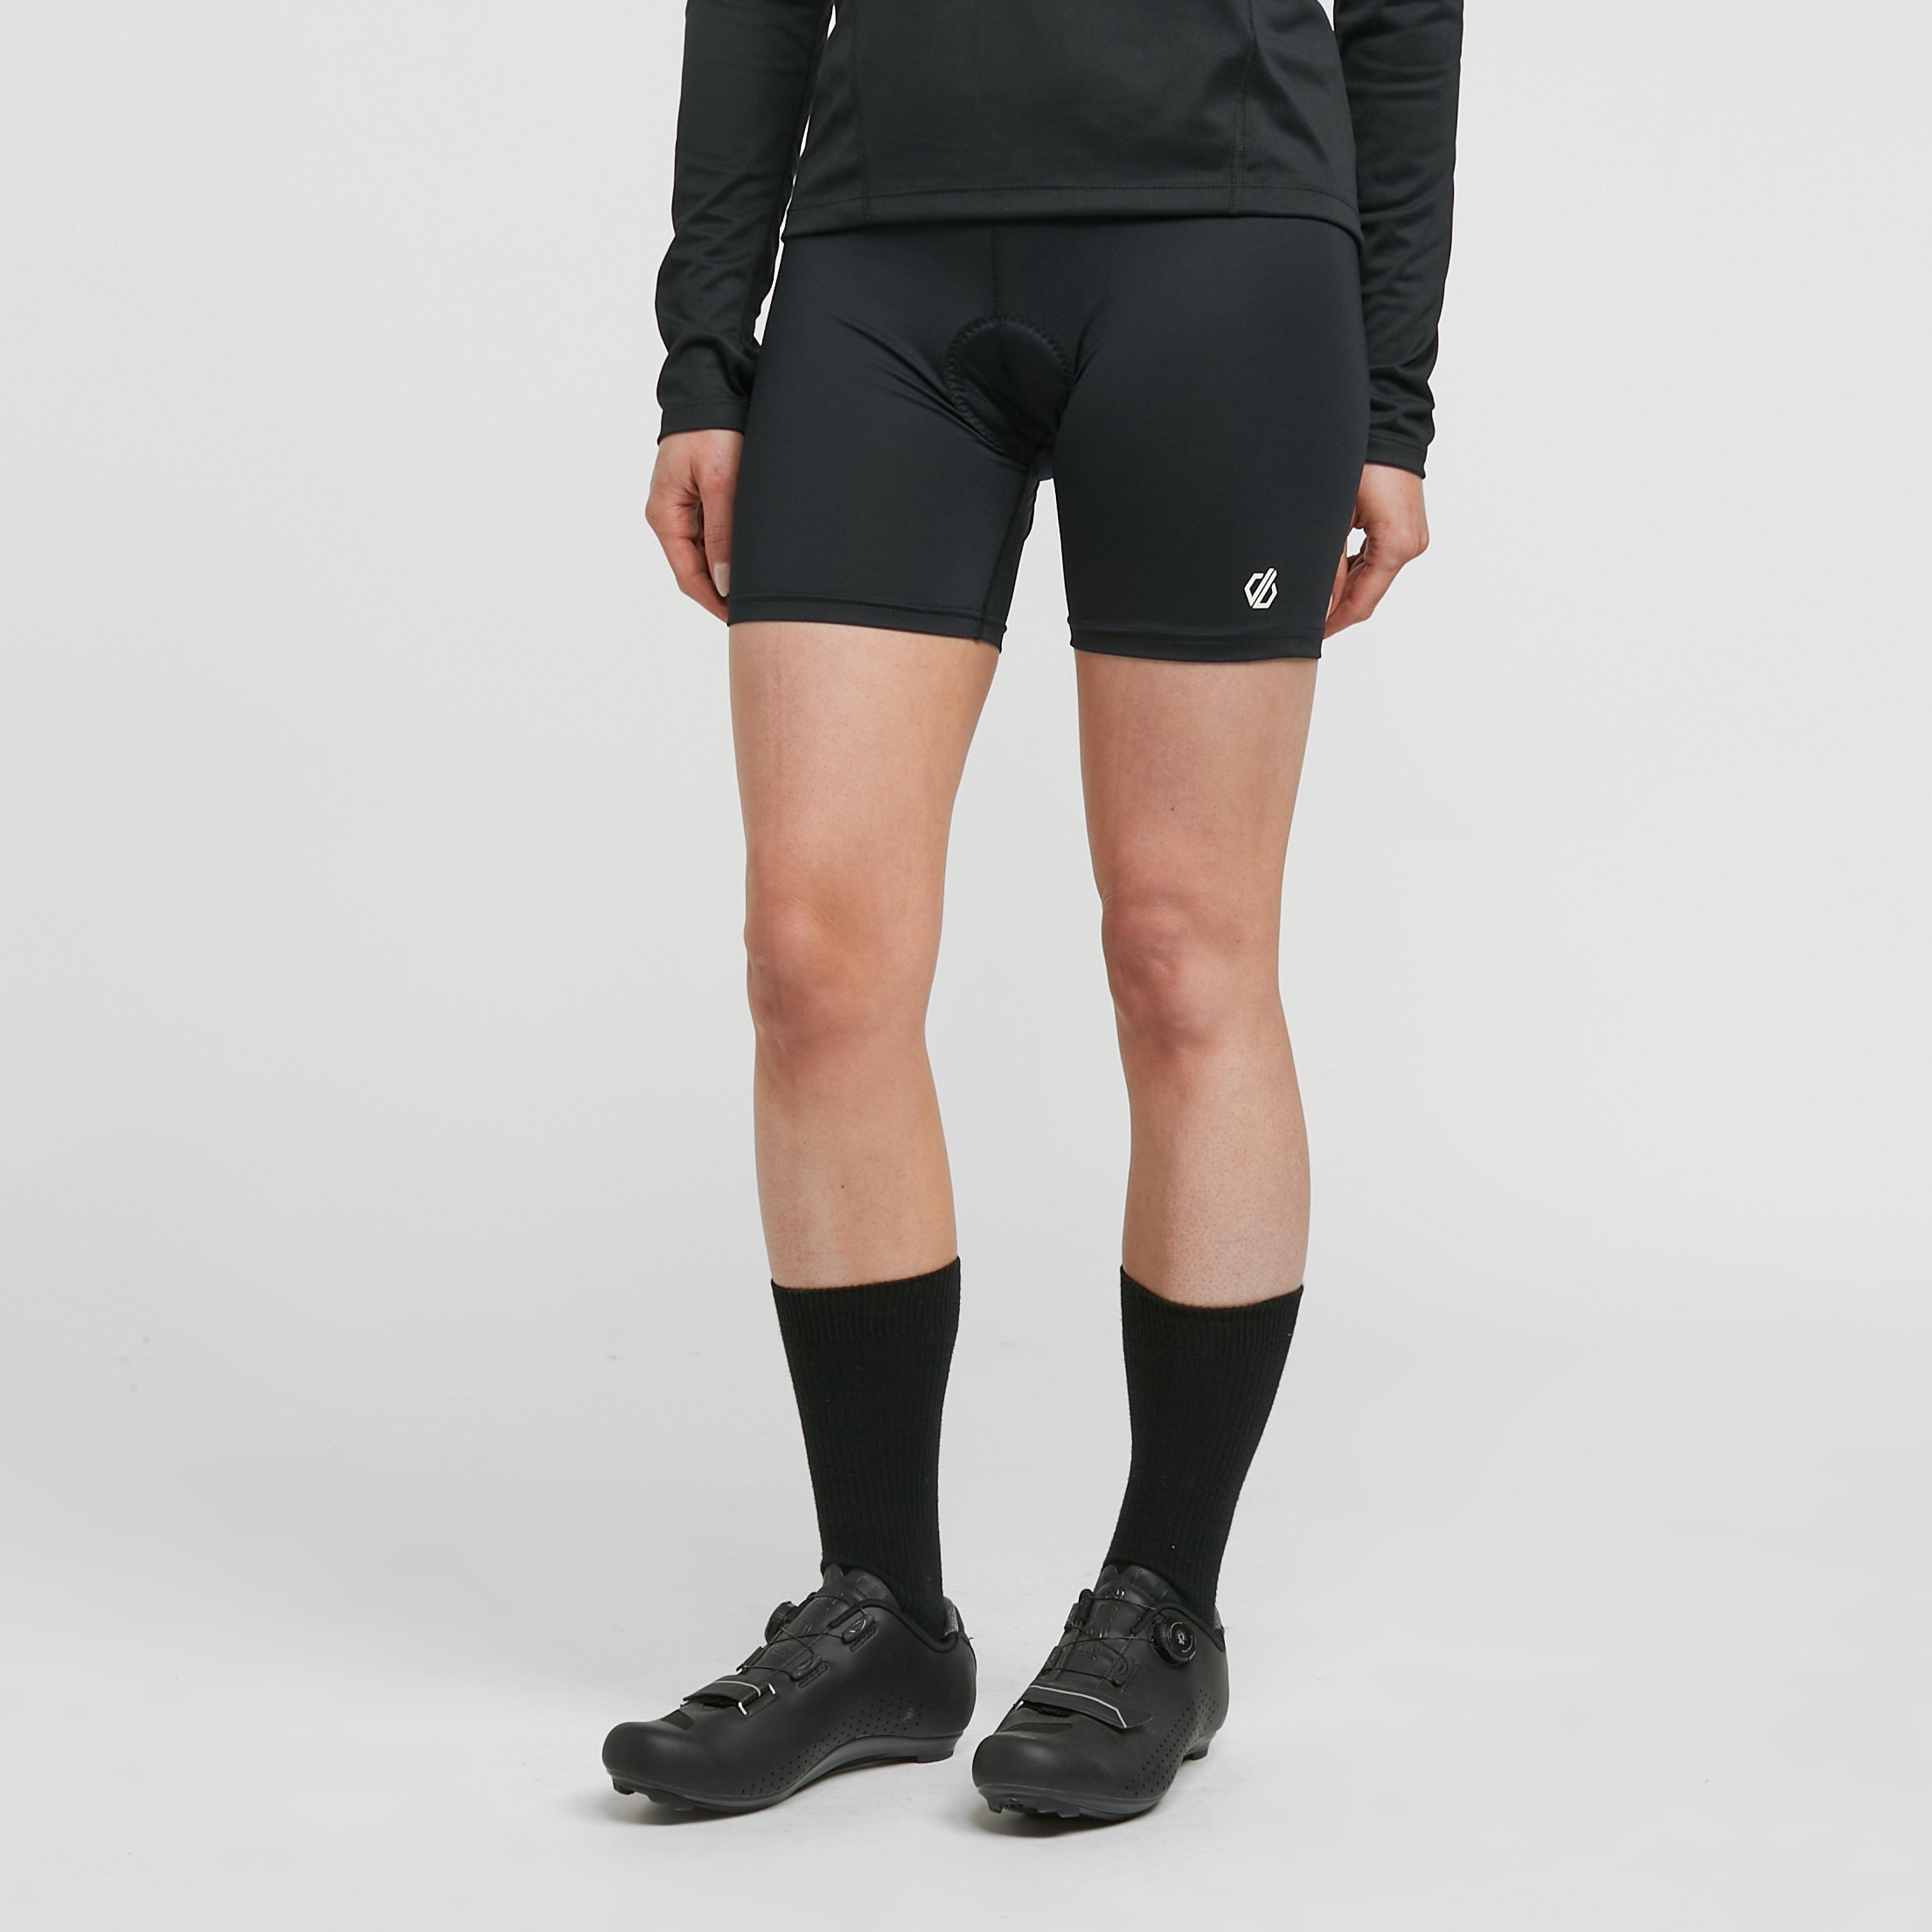 Photos - Cycling Clothing DARE 2B Women's Basic Padded Cycling Shorts, Black 